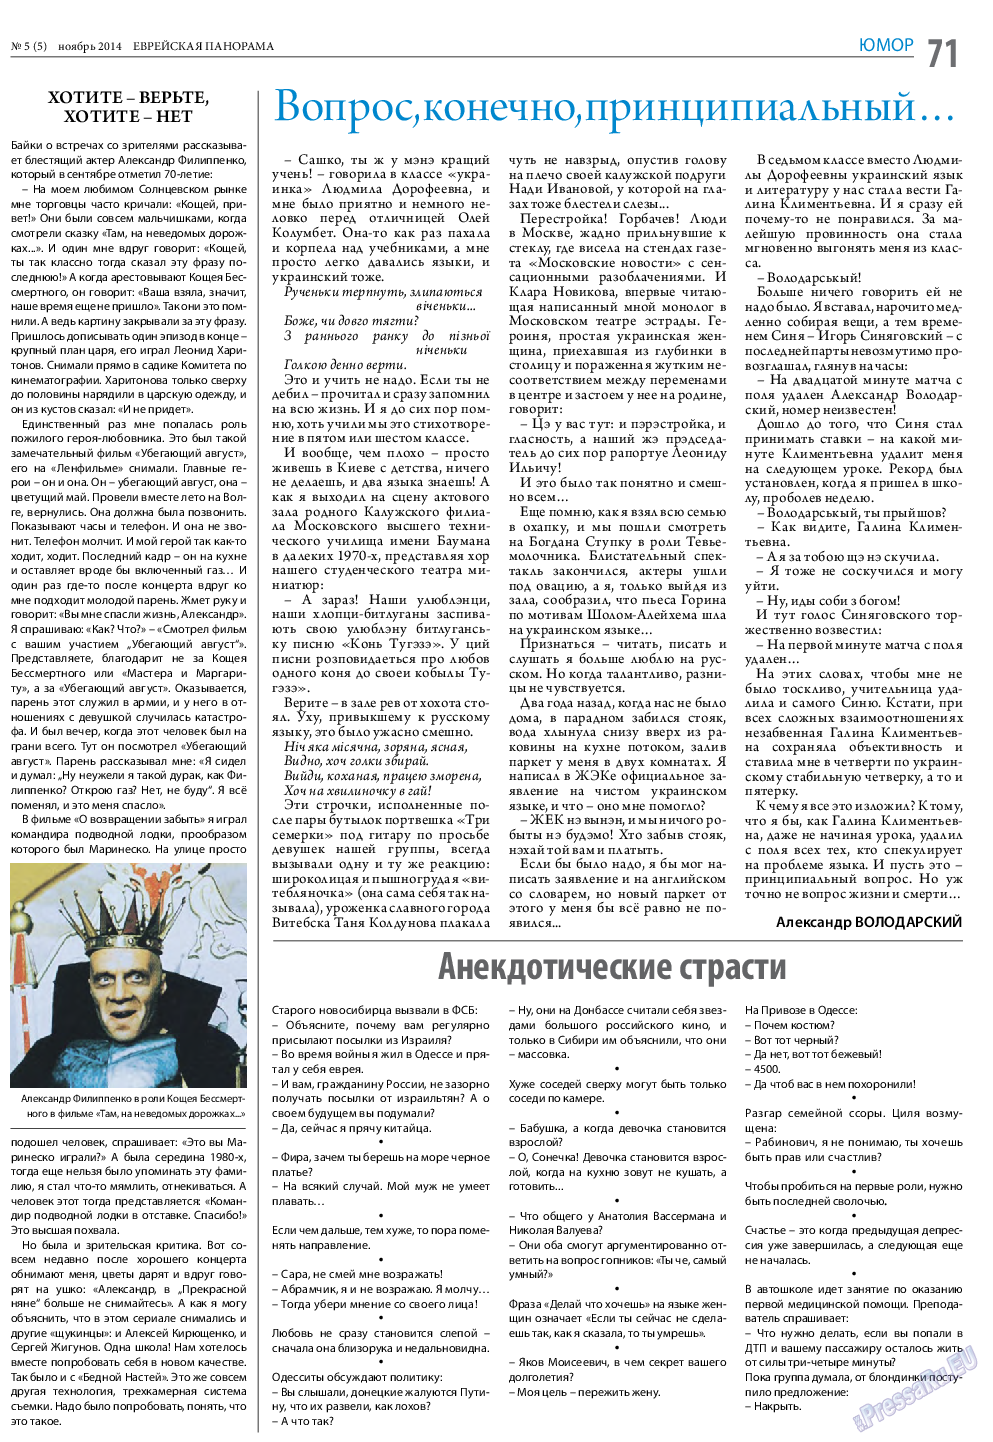 Еврейская панорама, газета. 2014 №5 стр.71